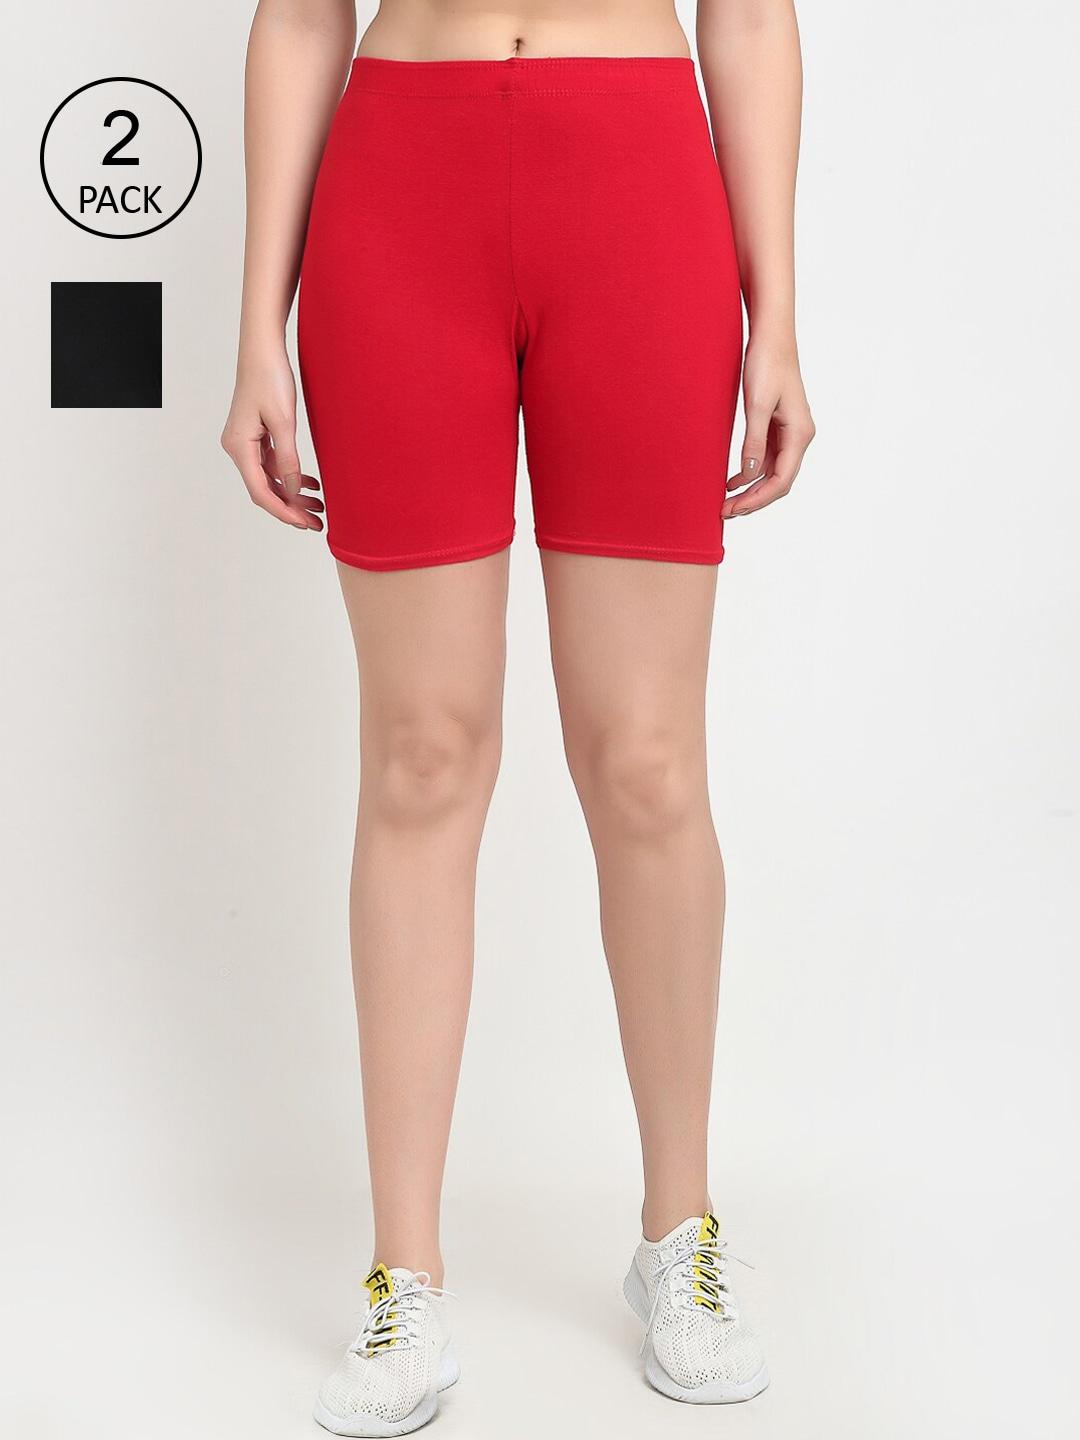 GRACIT Women Pack of 2 Black & Red Biker Shorts